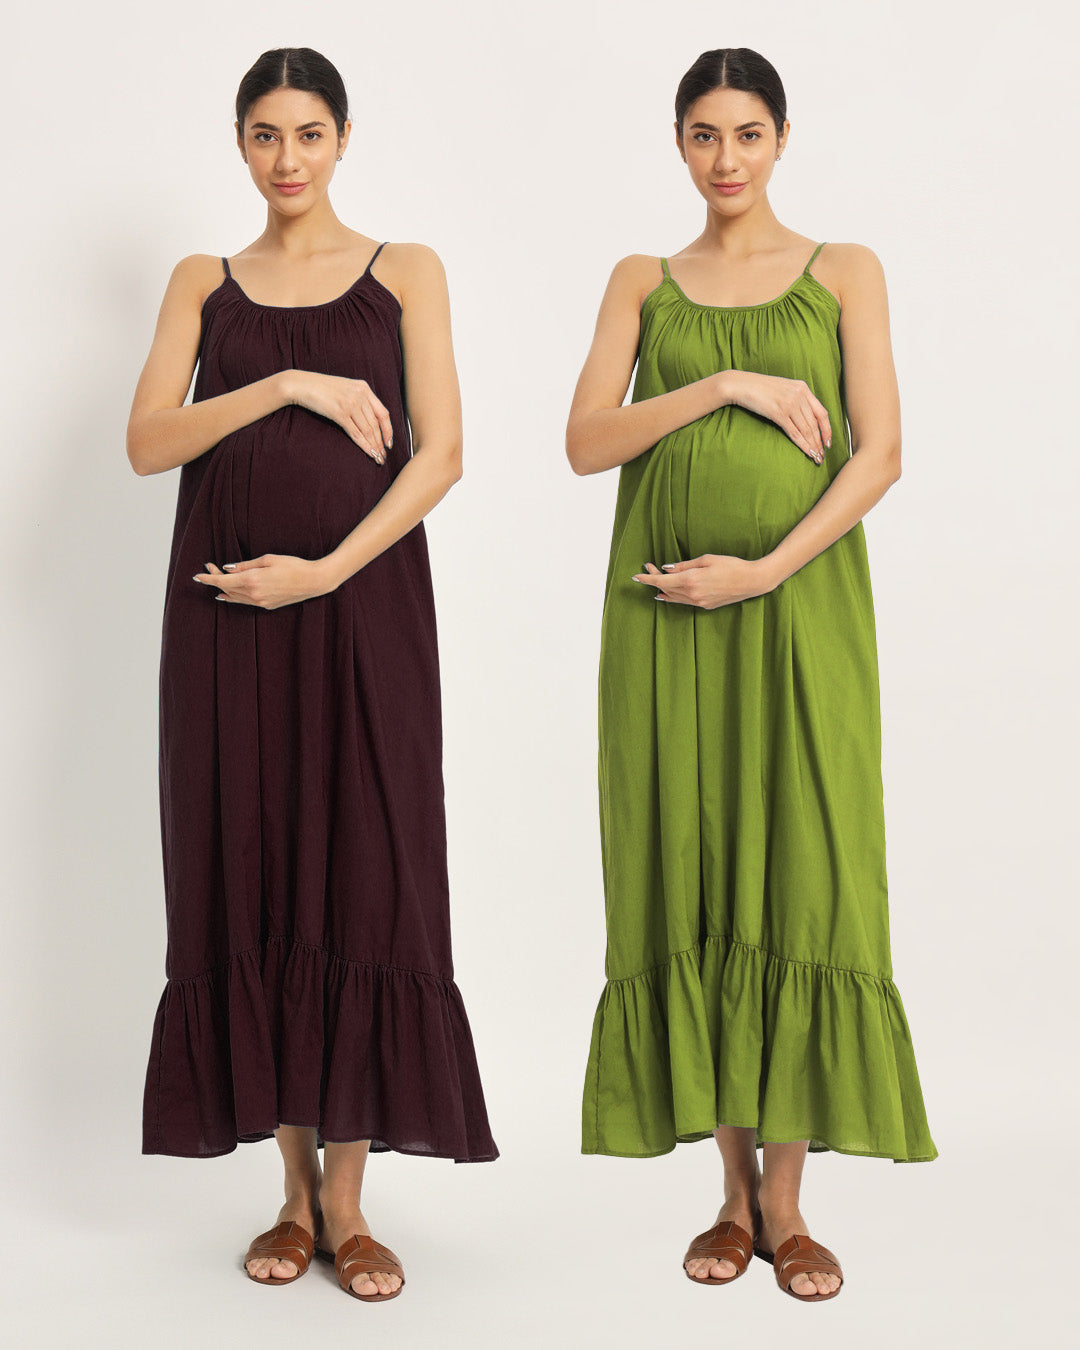 Combo: Plum Passion & Sage Green Belly Laugh Maternity & Nursing Dress - Set of 2